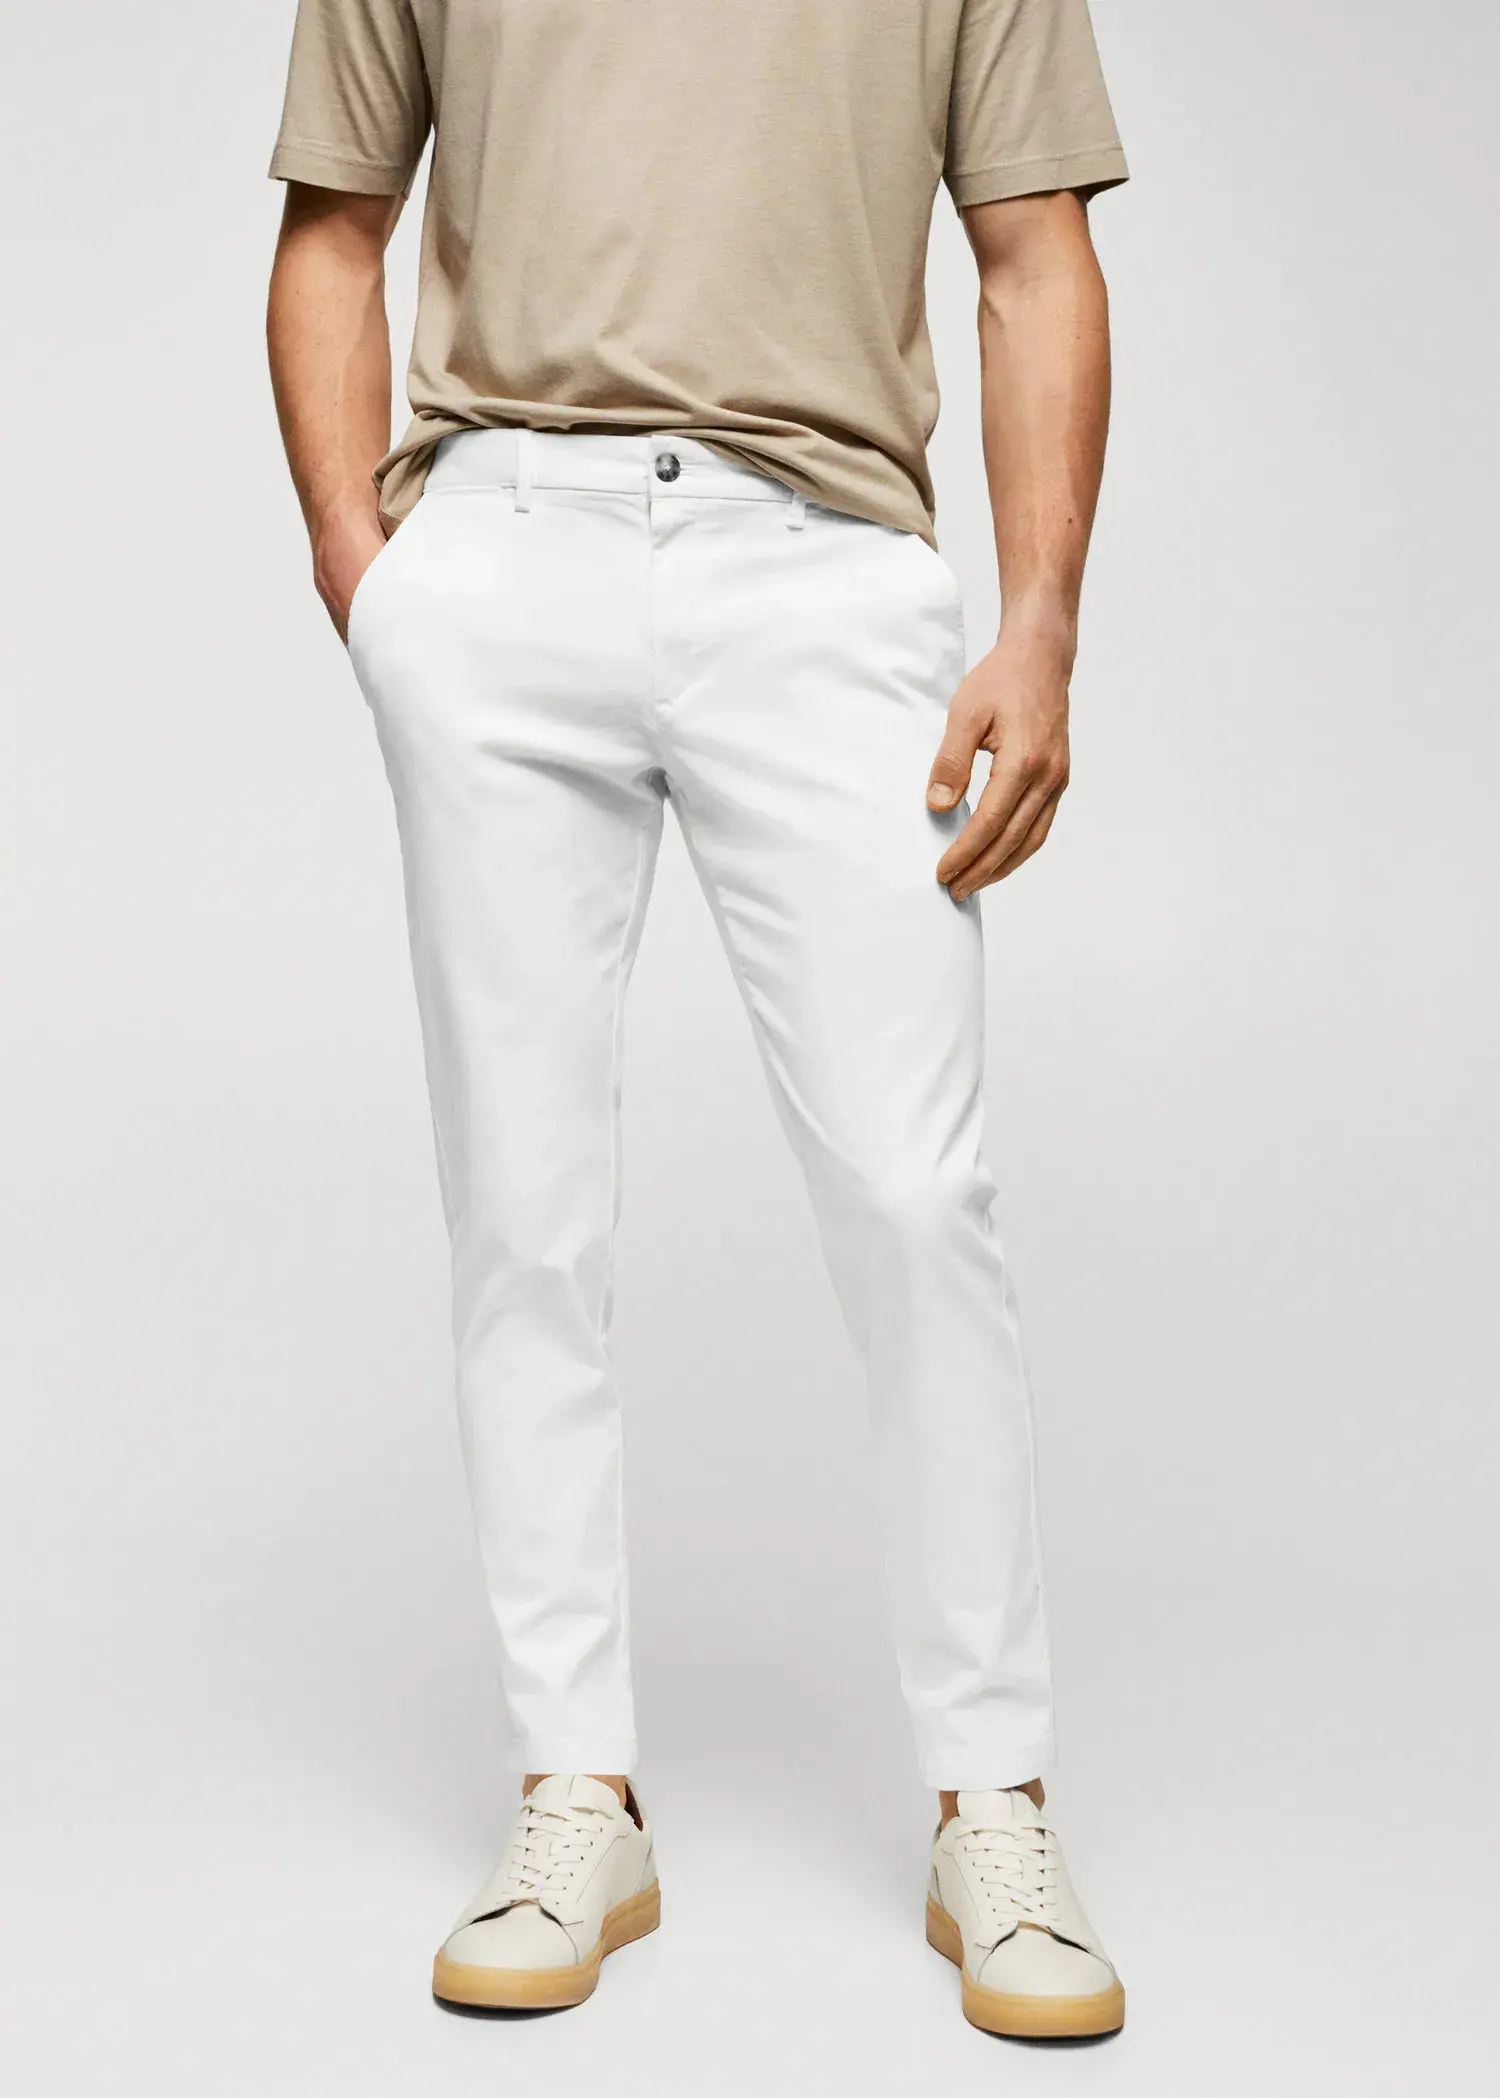 Mango Cotton tapered crop pants. a man wearing white pants and a tan shirt. 